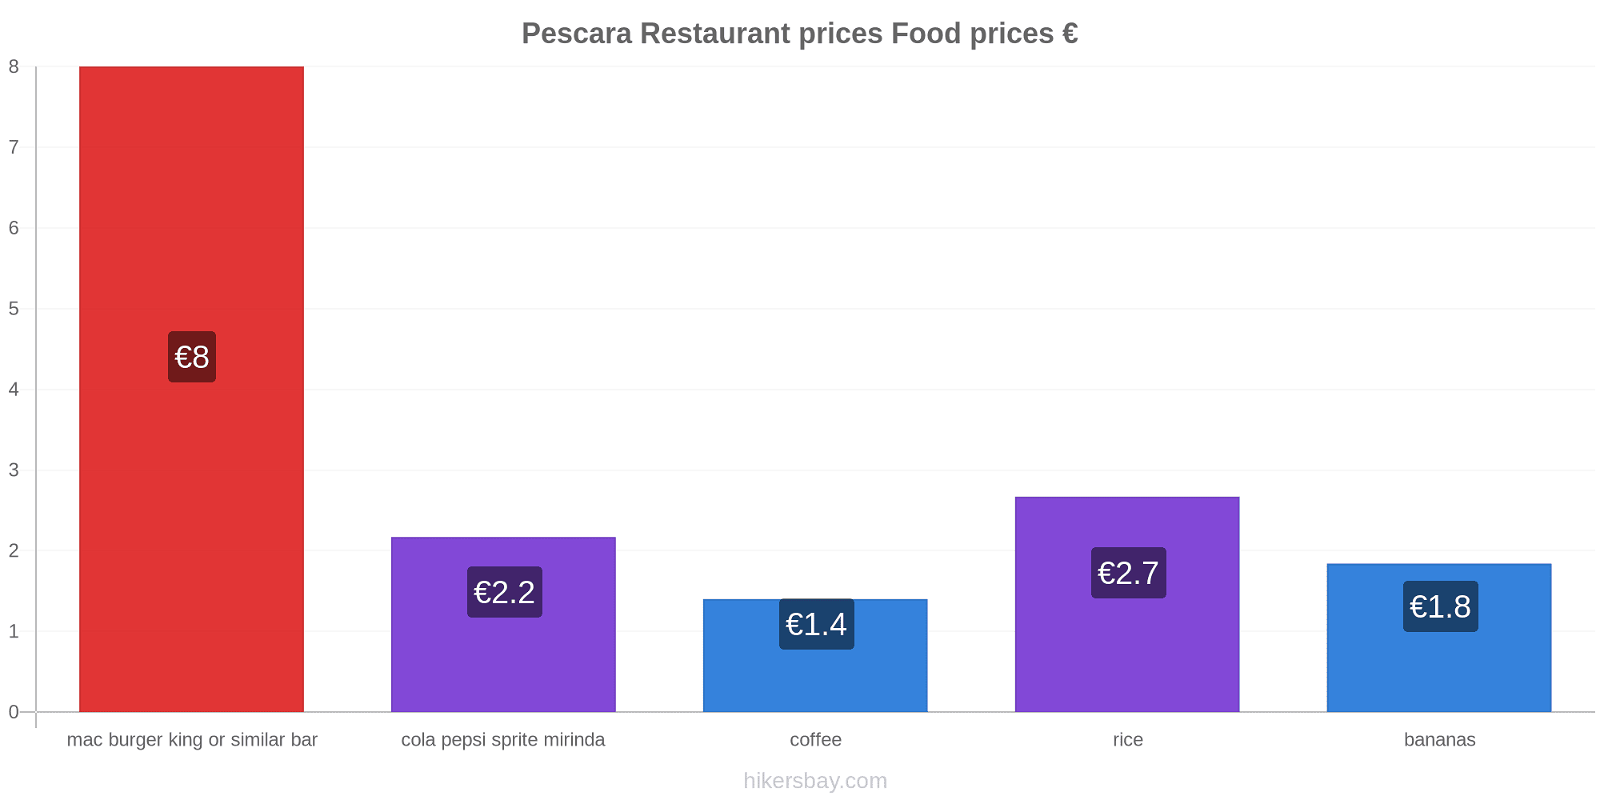 Pescara price changes hikersbay.com